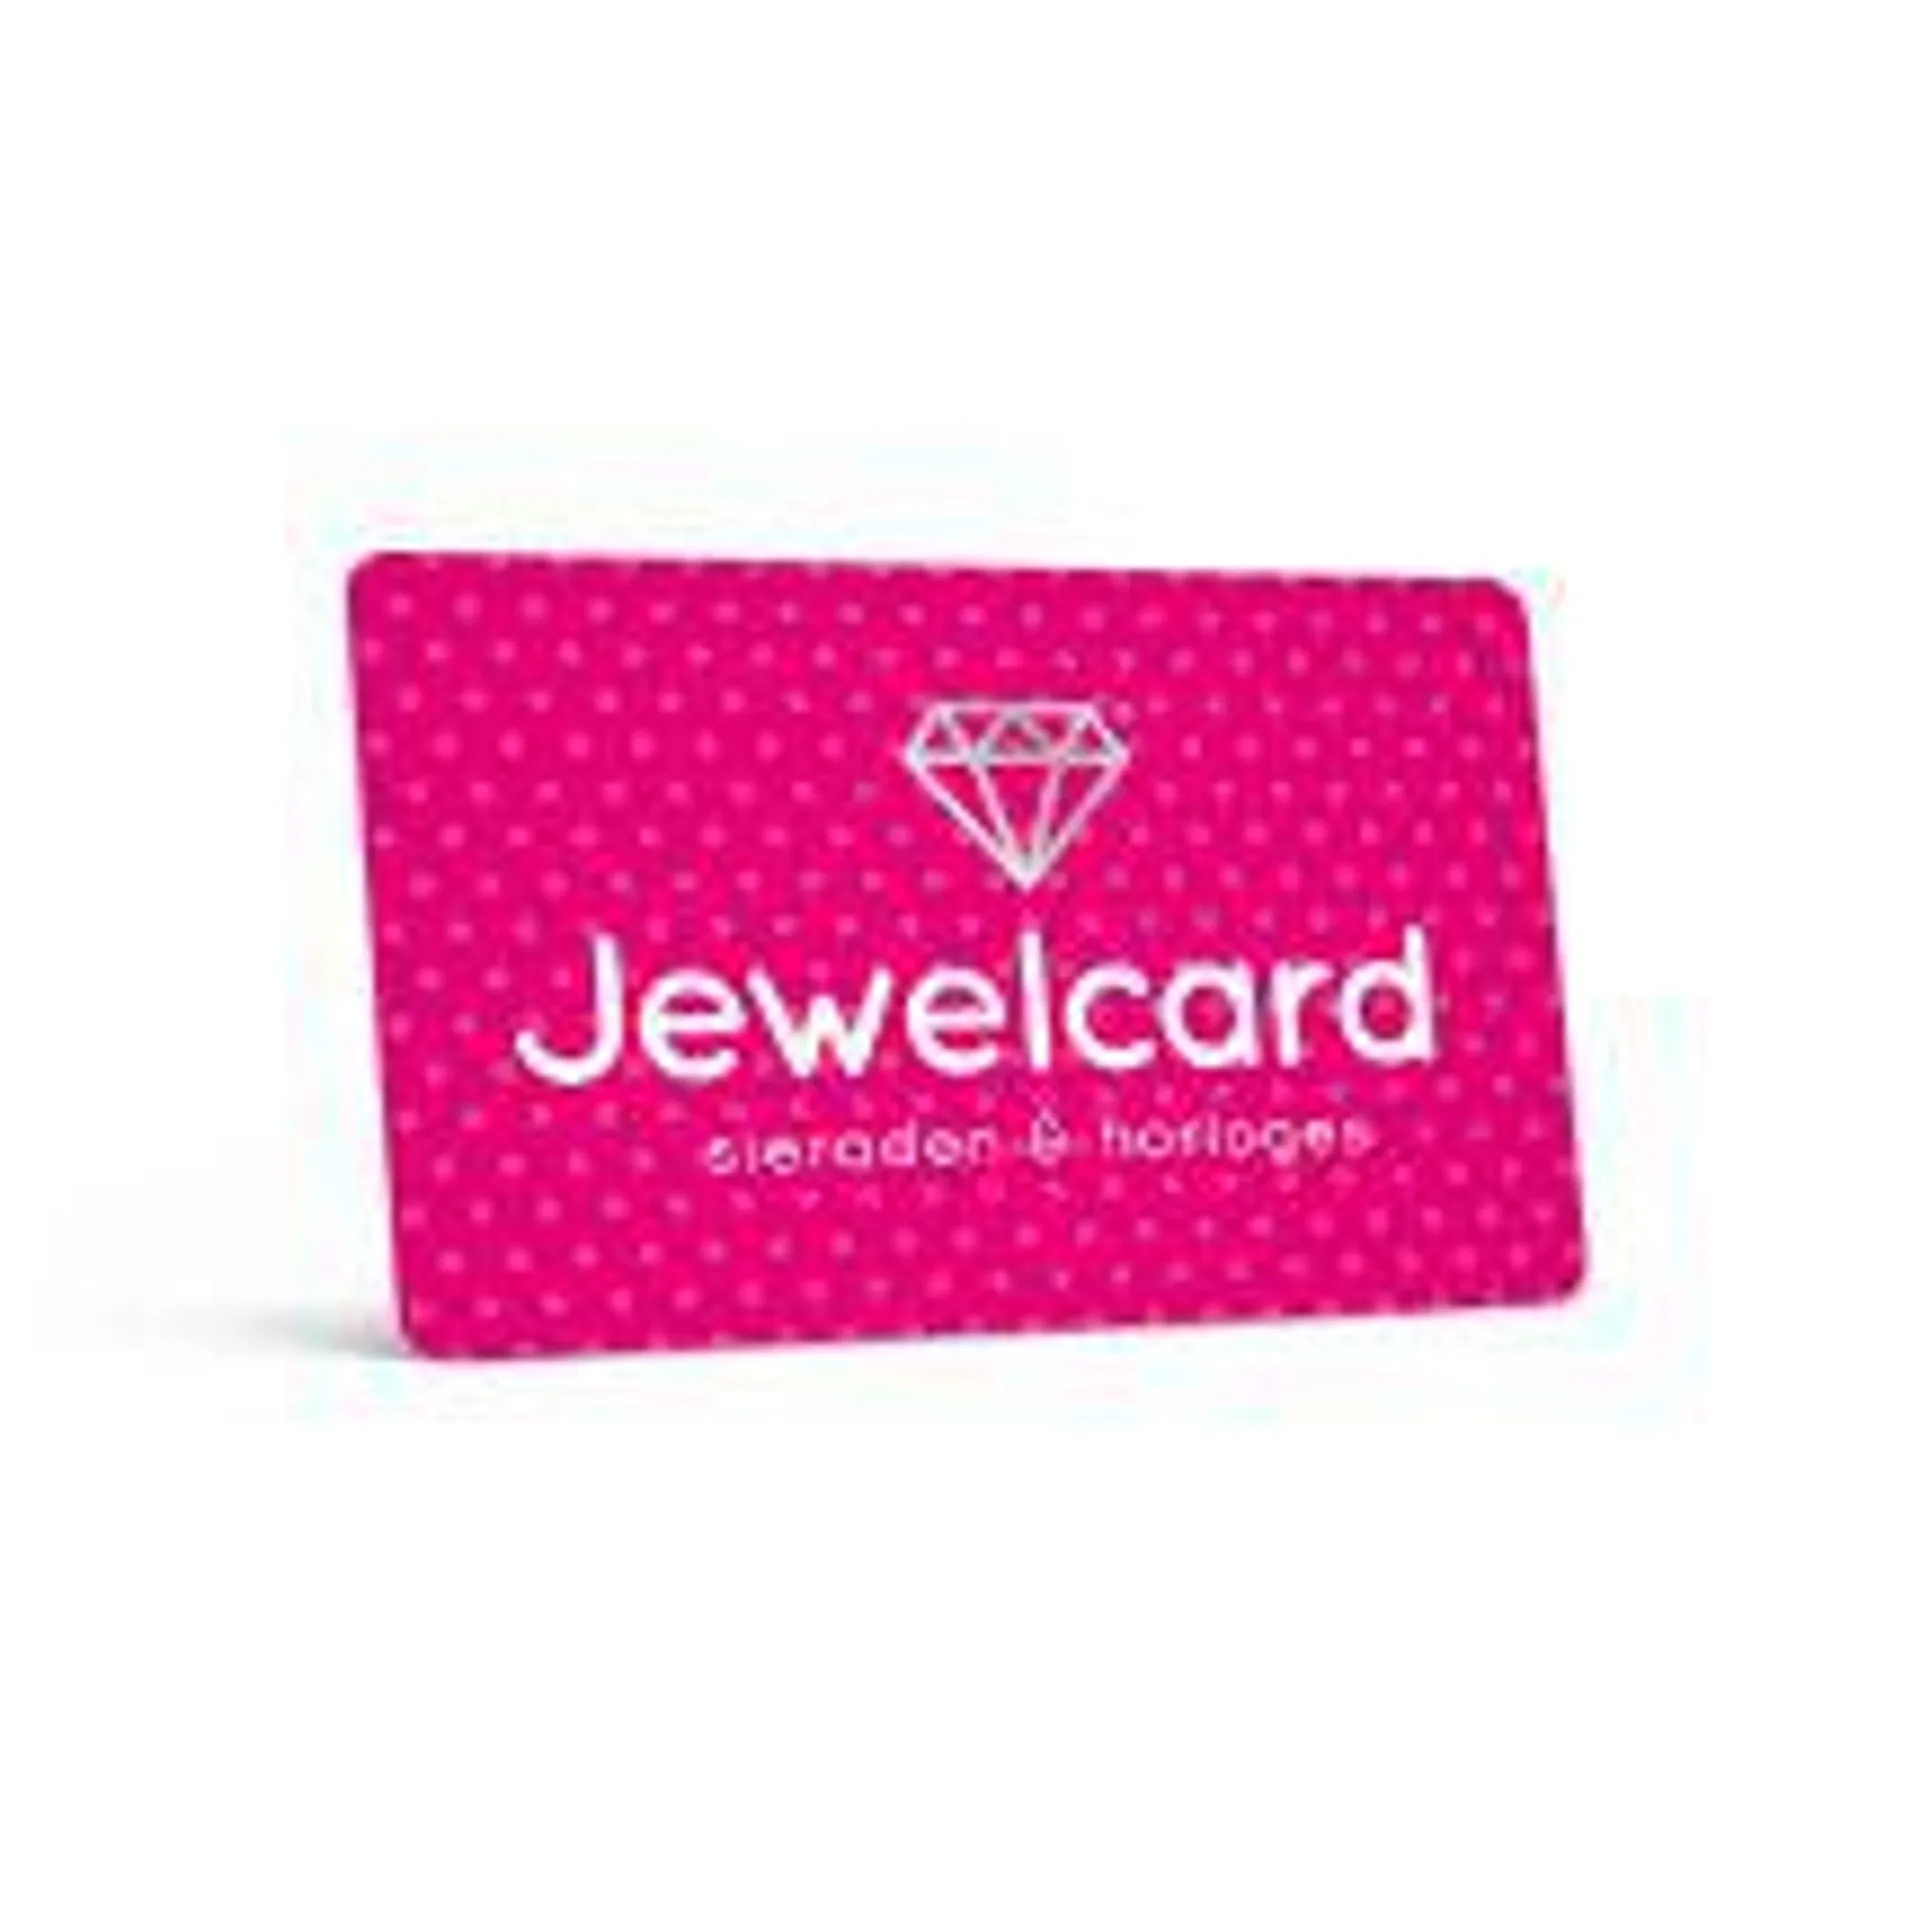 Jewelcard